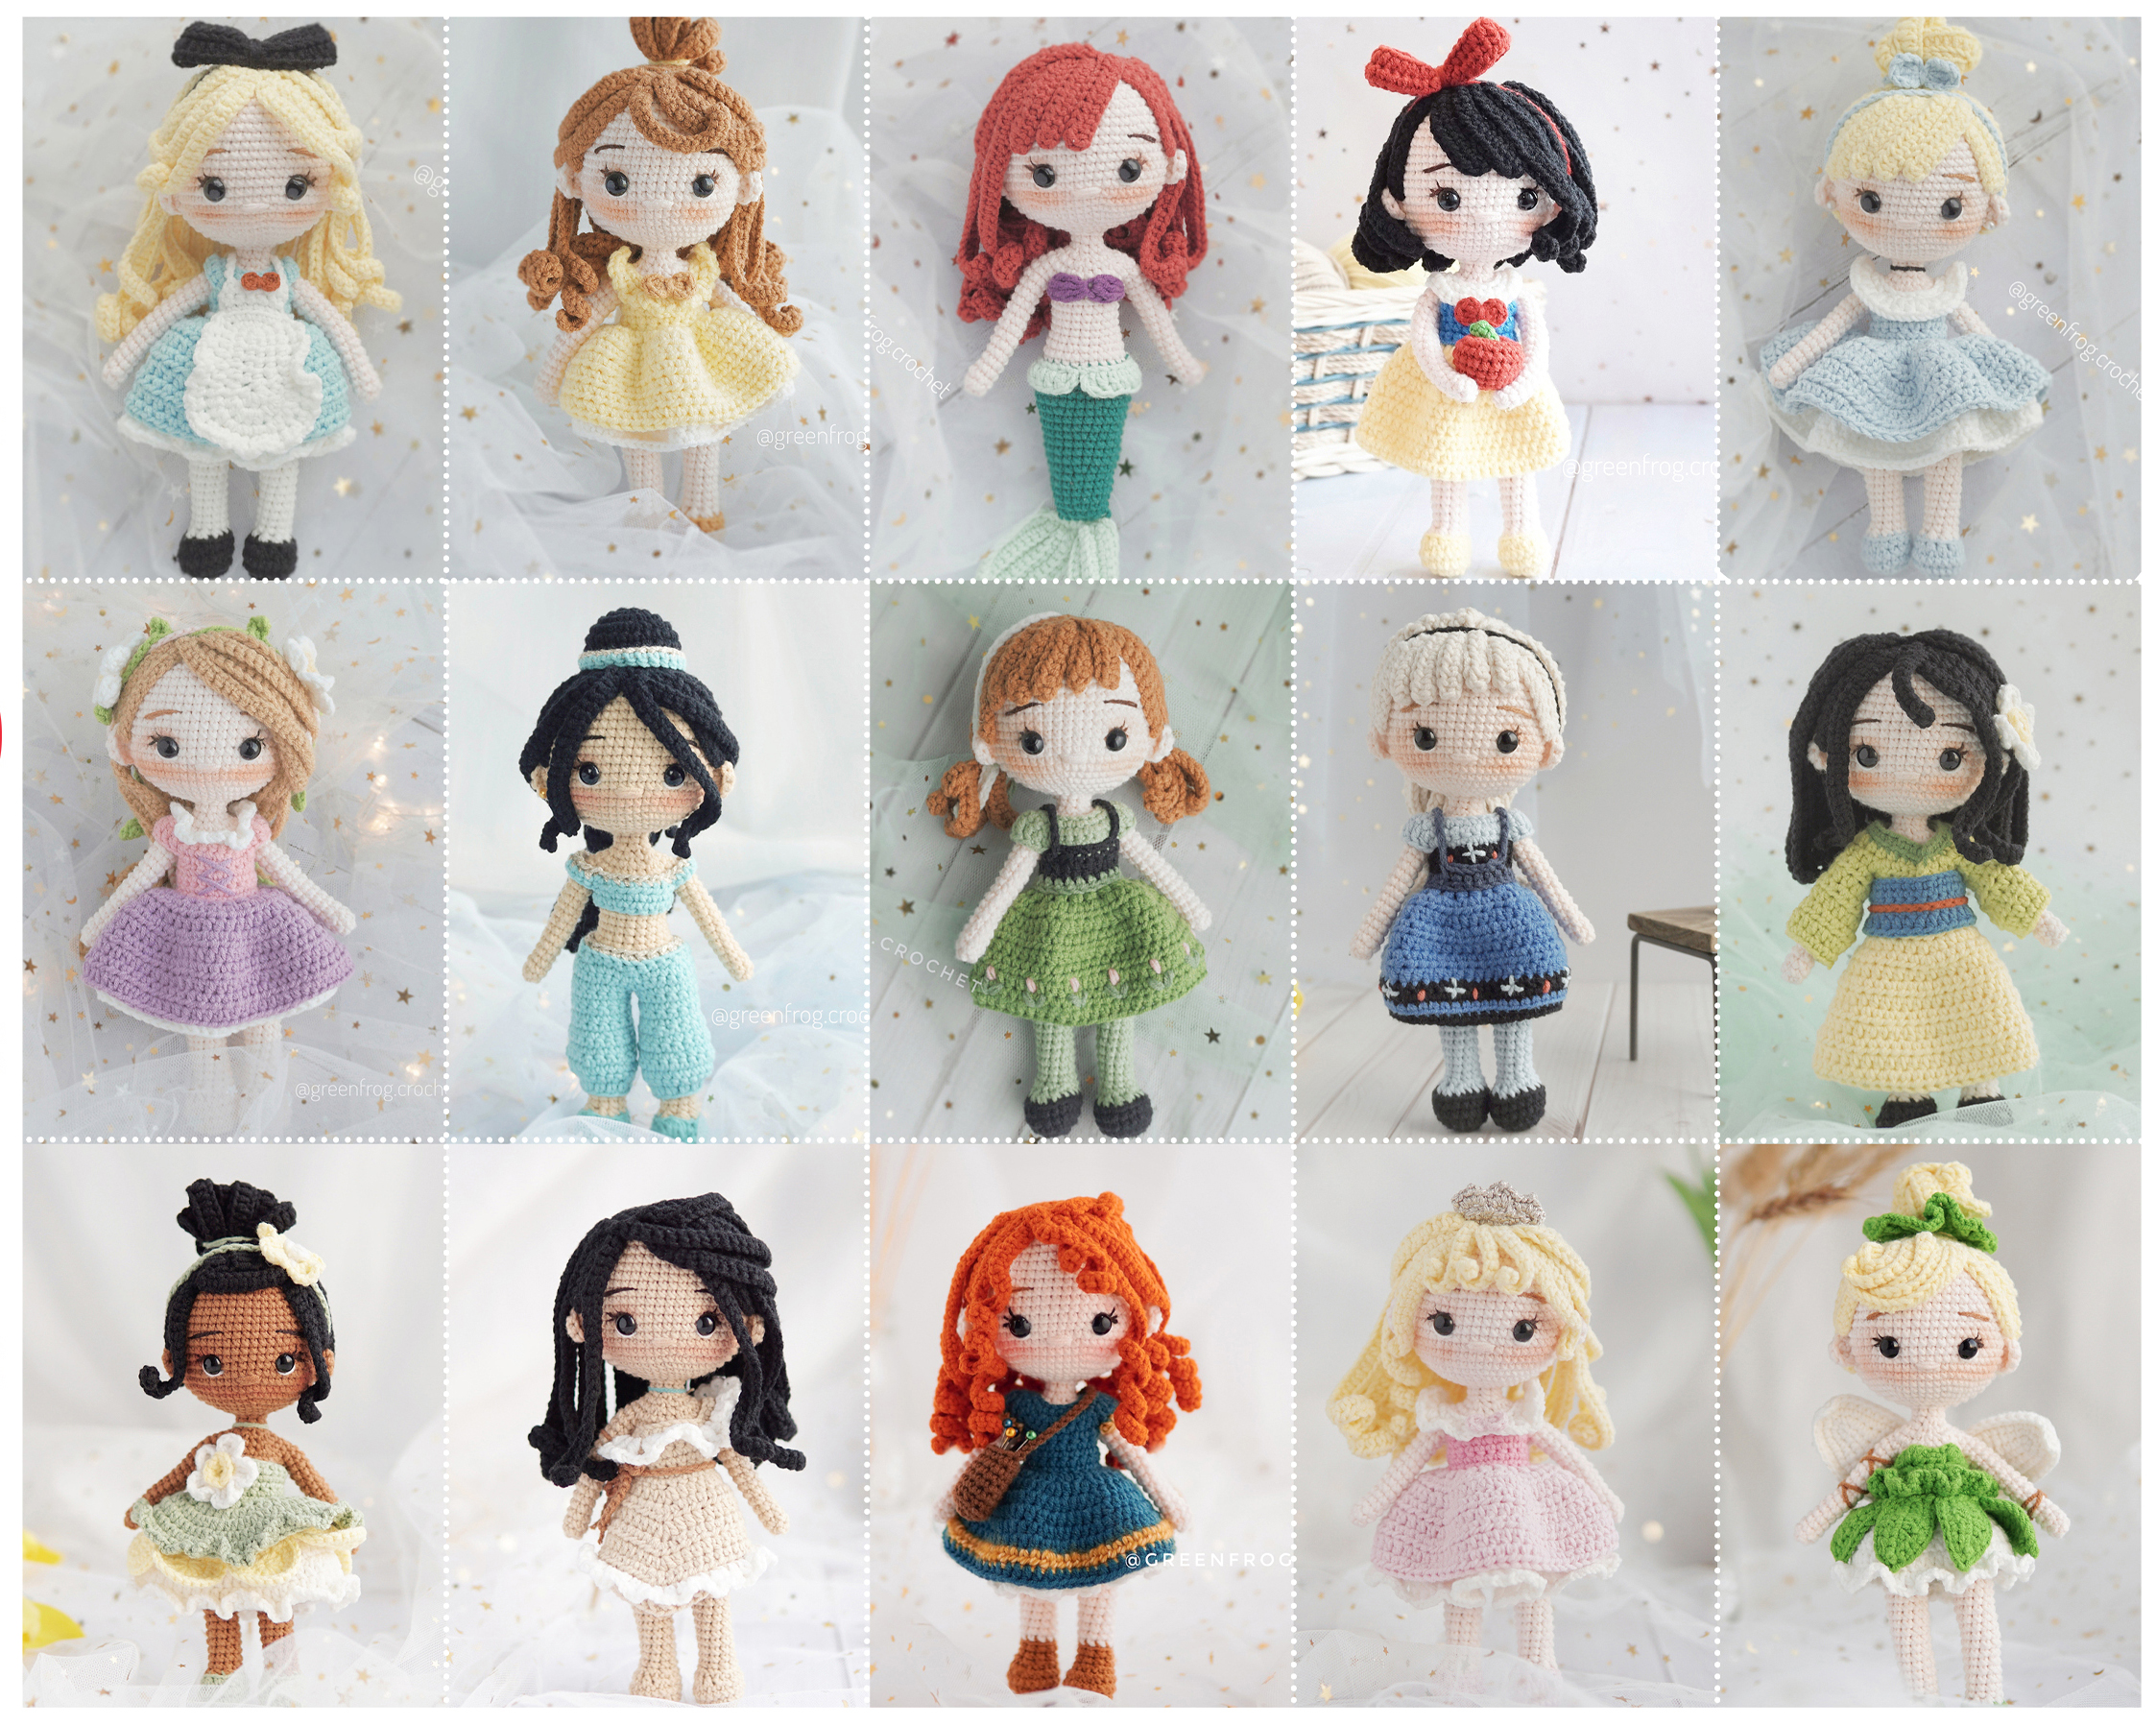 Crochet Disney Characters Ideas: Amigurumi Disney Characters Patterns:  Guide to Crochet Disney Characters See more